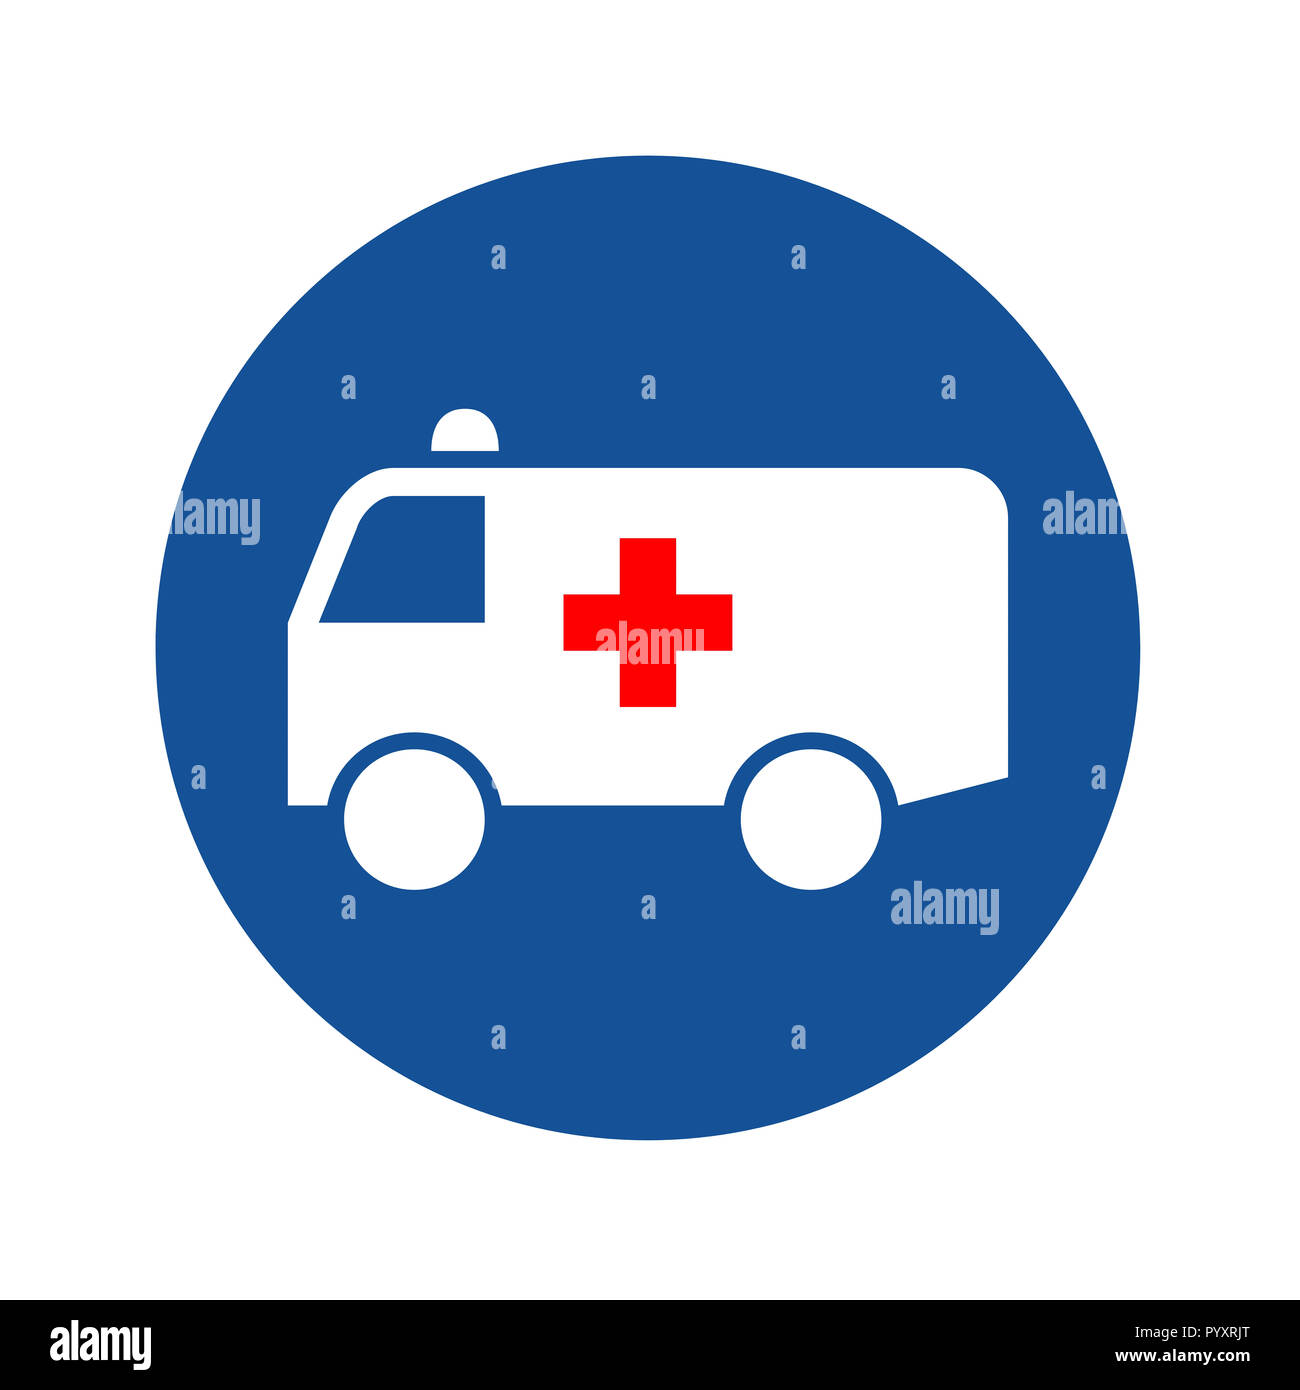 Ambulance icon with a blue circle Stock Photo